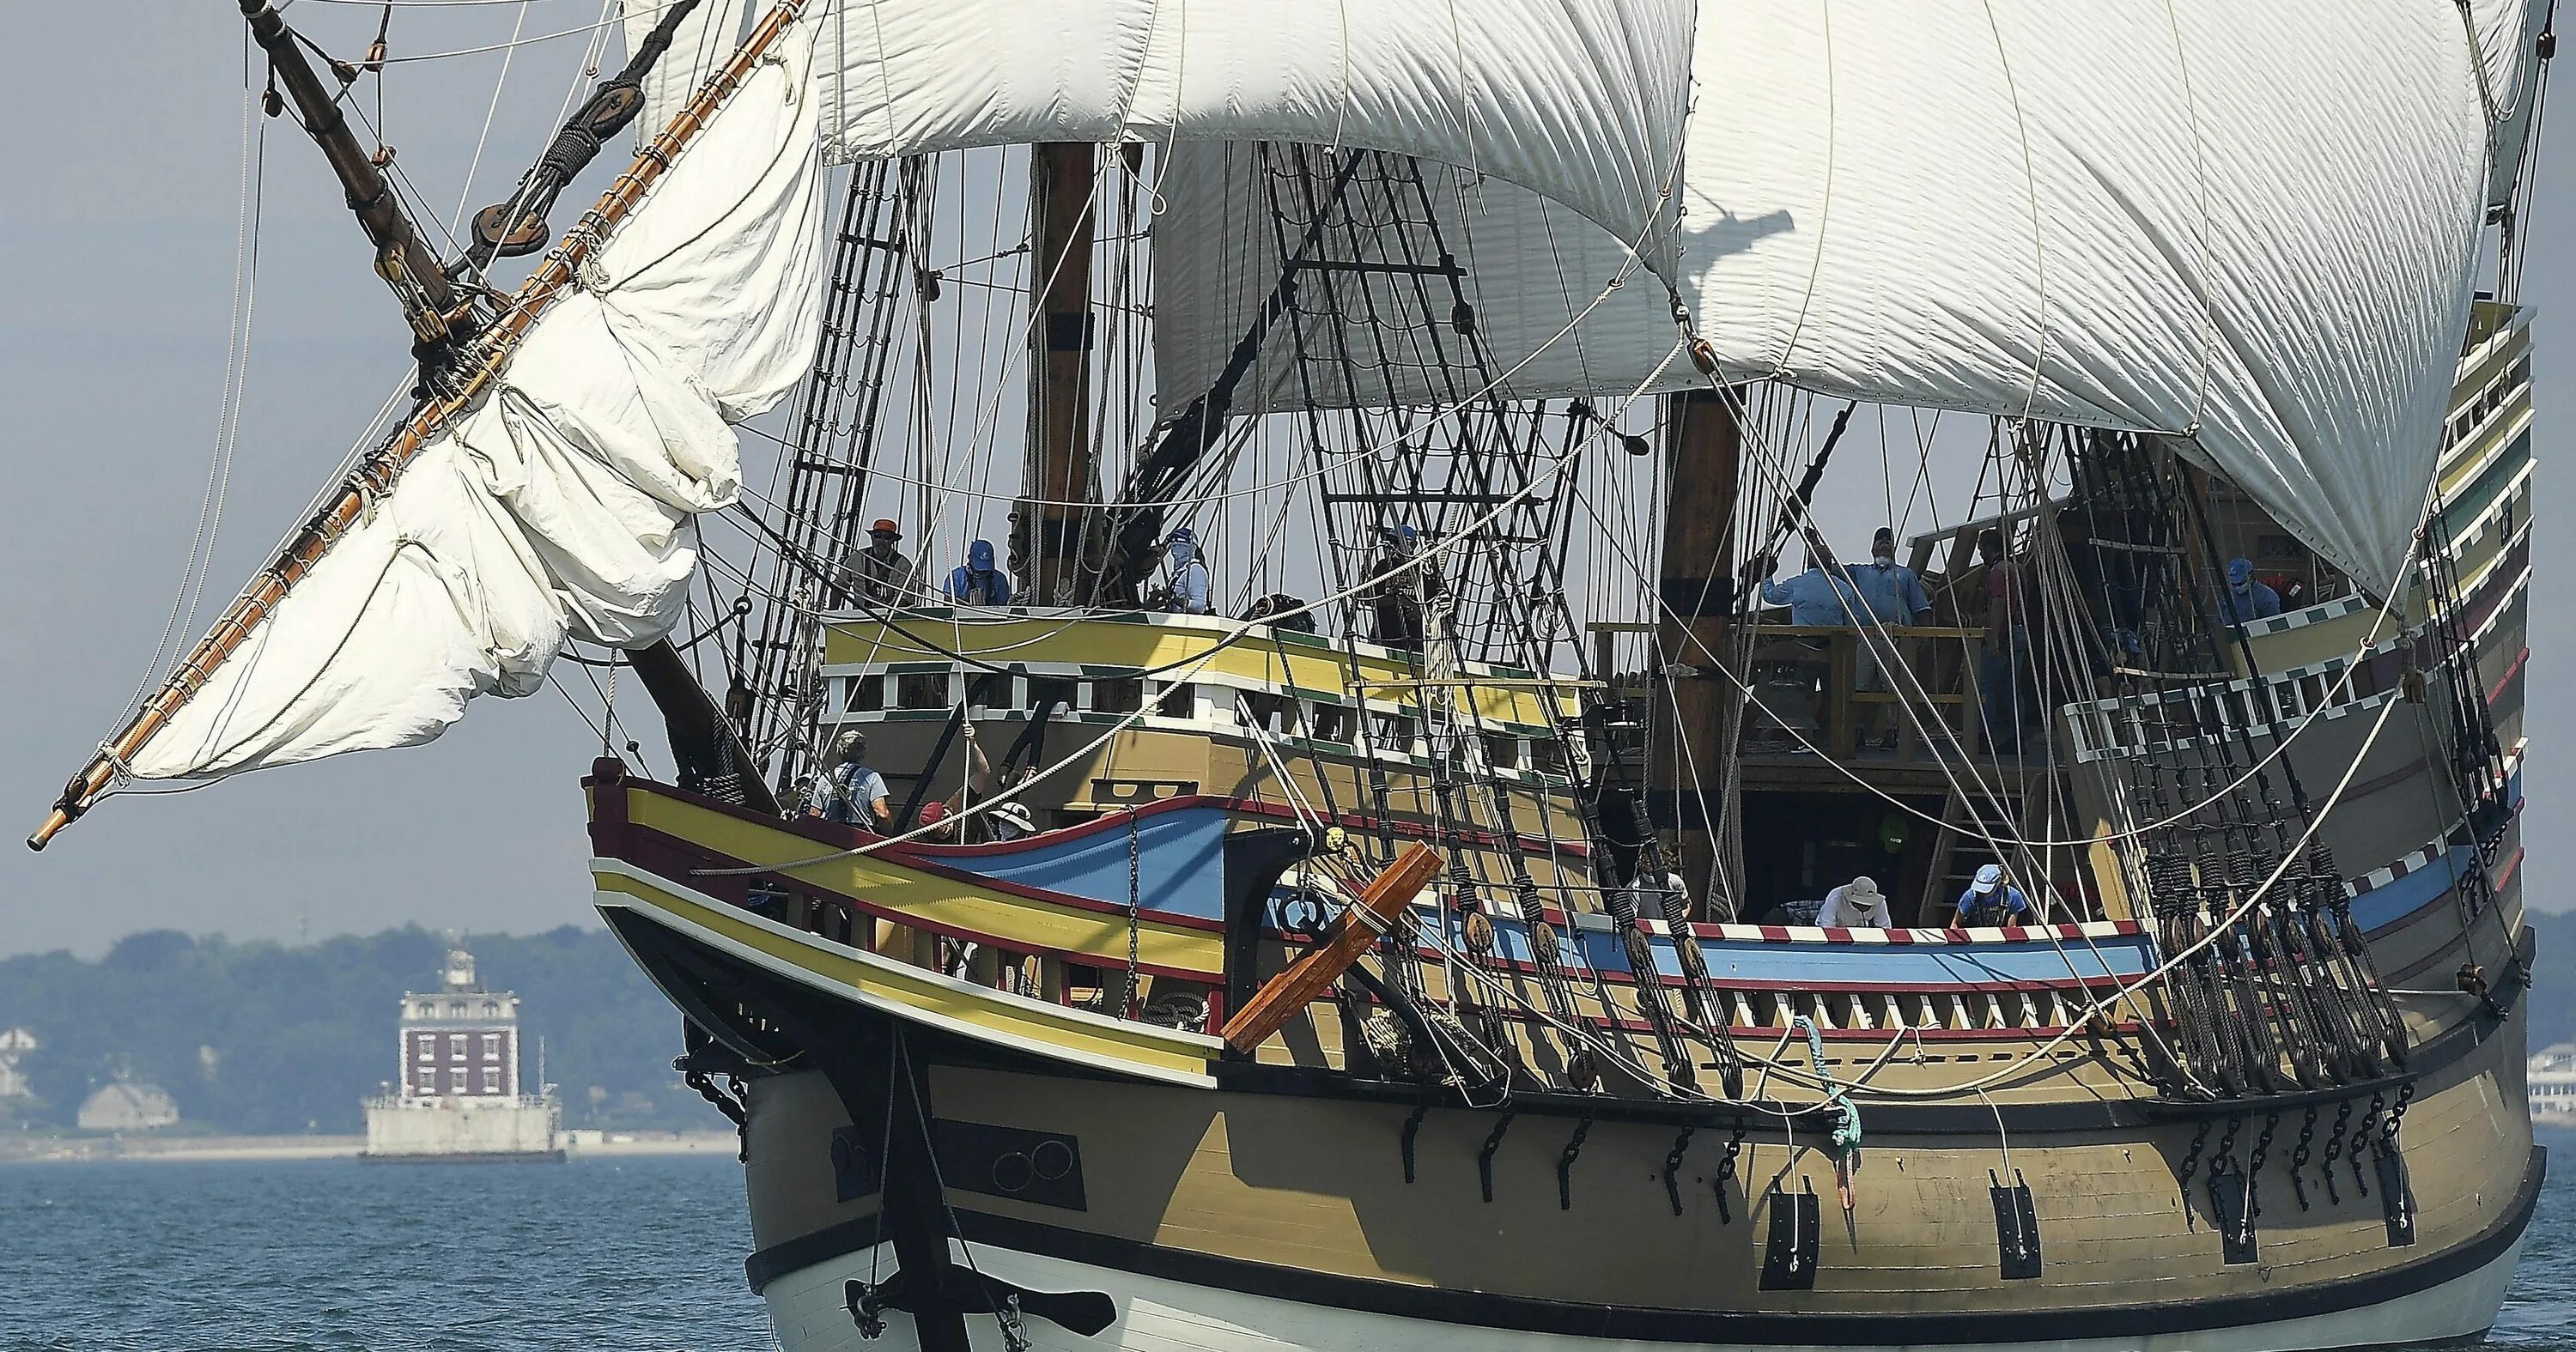 Корабль Мэйфлауэр 1620. Mayflower корабль. Мэйфлауэр корабль 1620 год. Mayflower II.